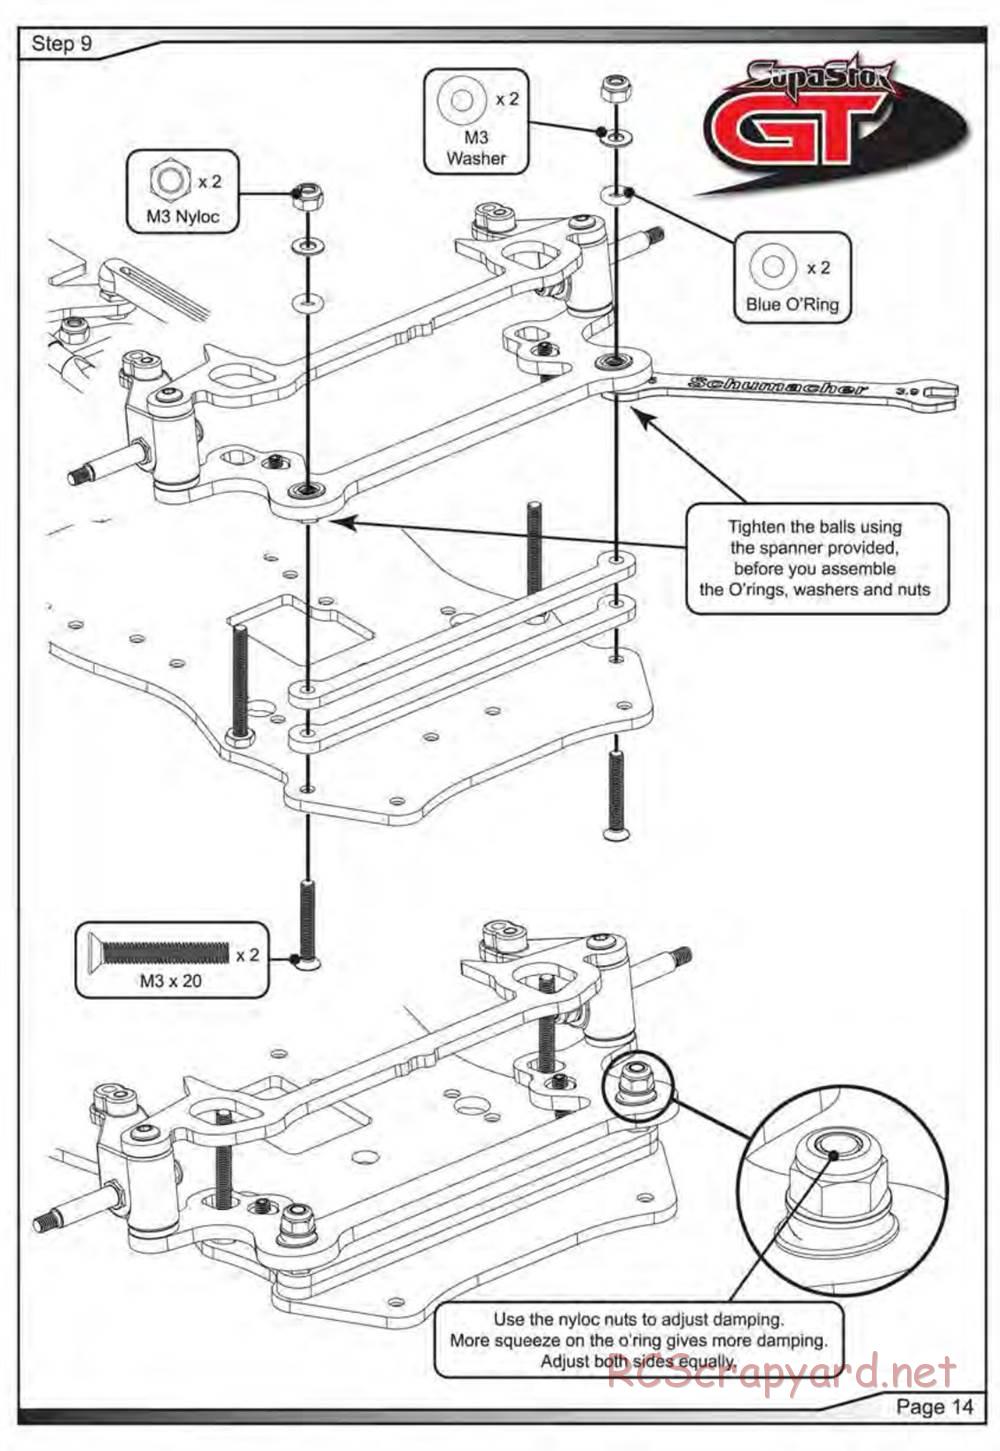 Schumacher - SupaStox GT - Manual - Page 15